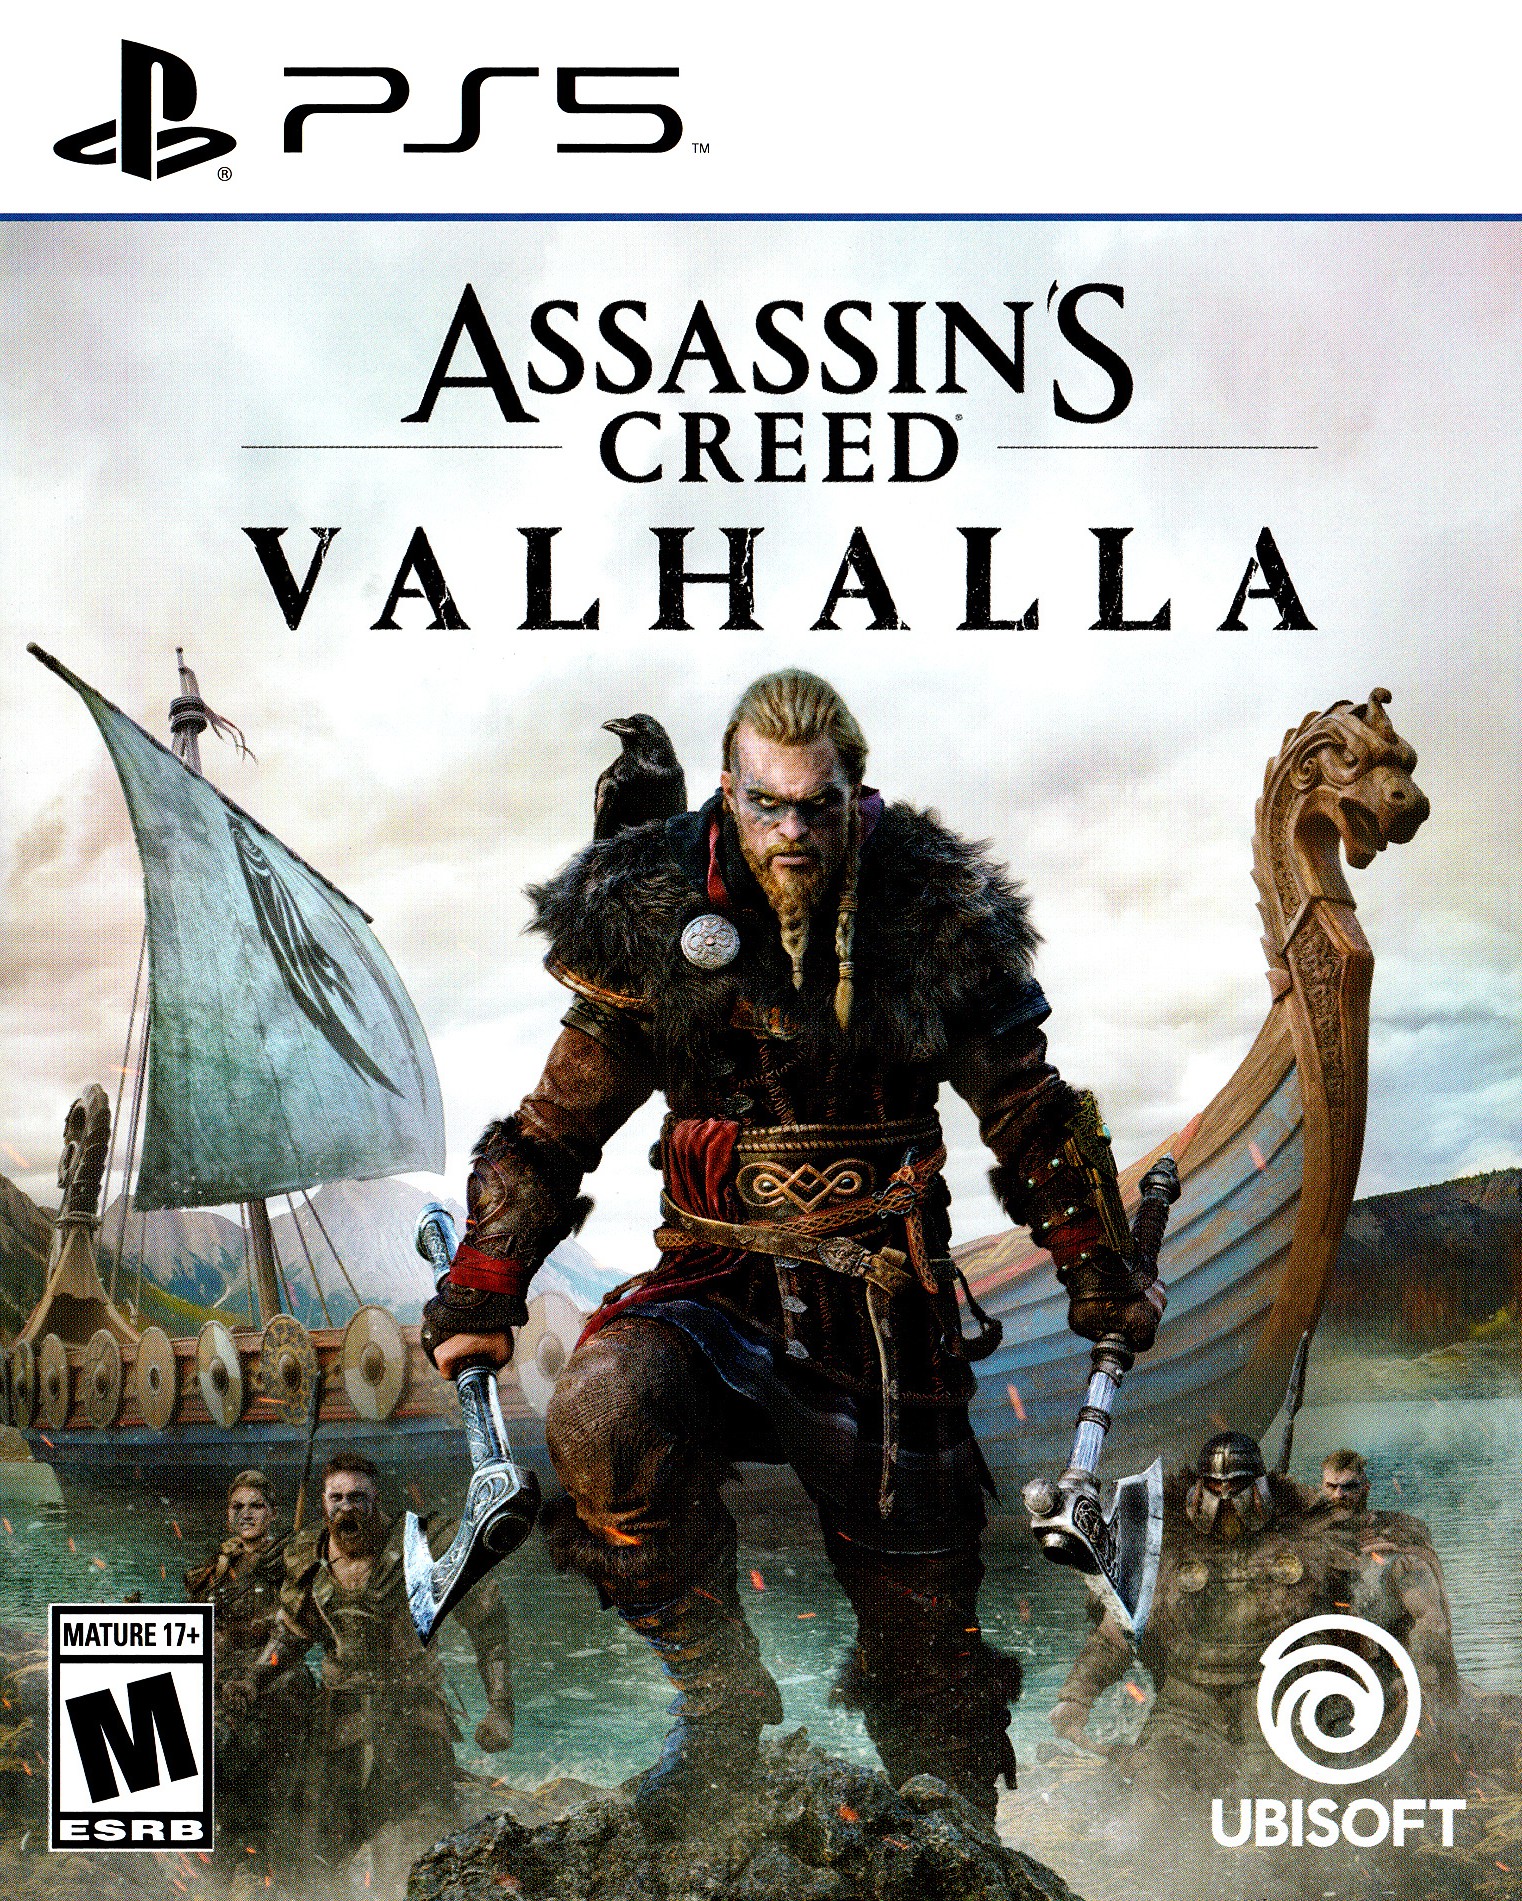 'Assassin's Creed: Valhalla'